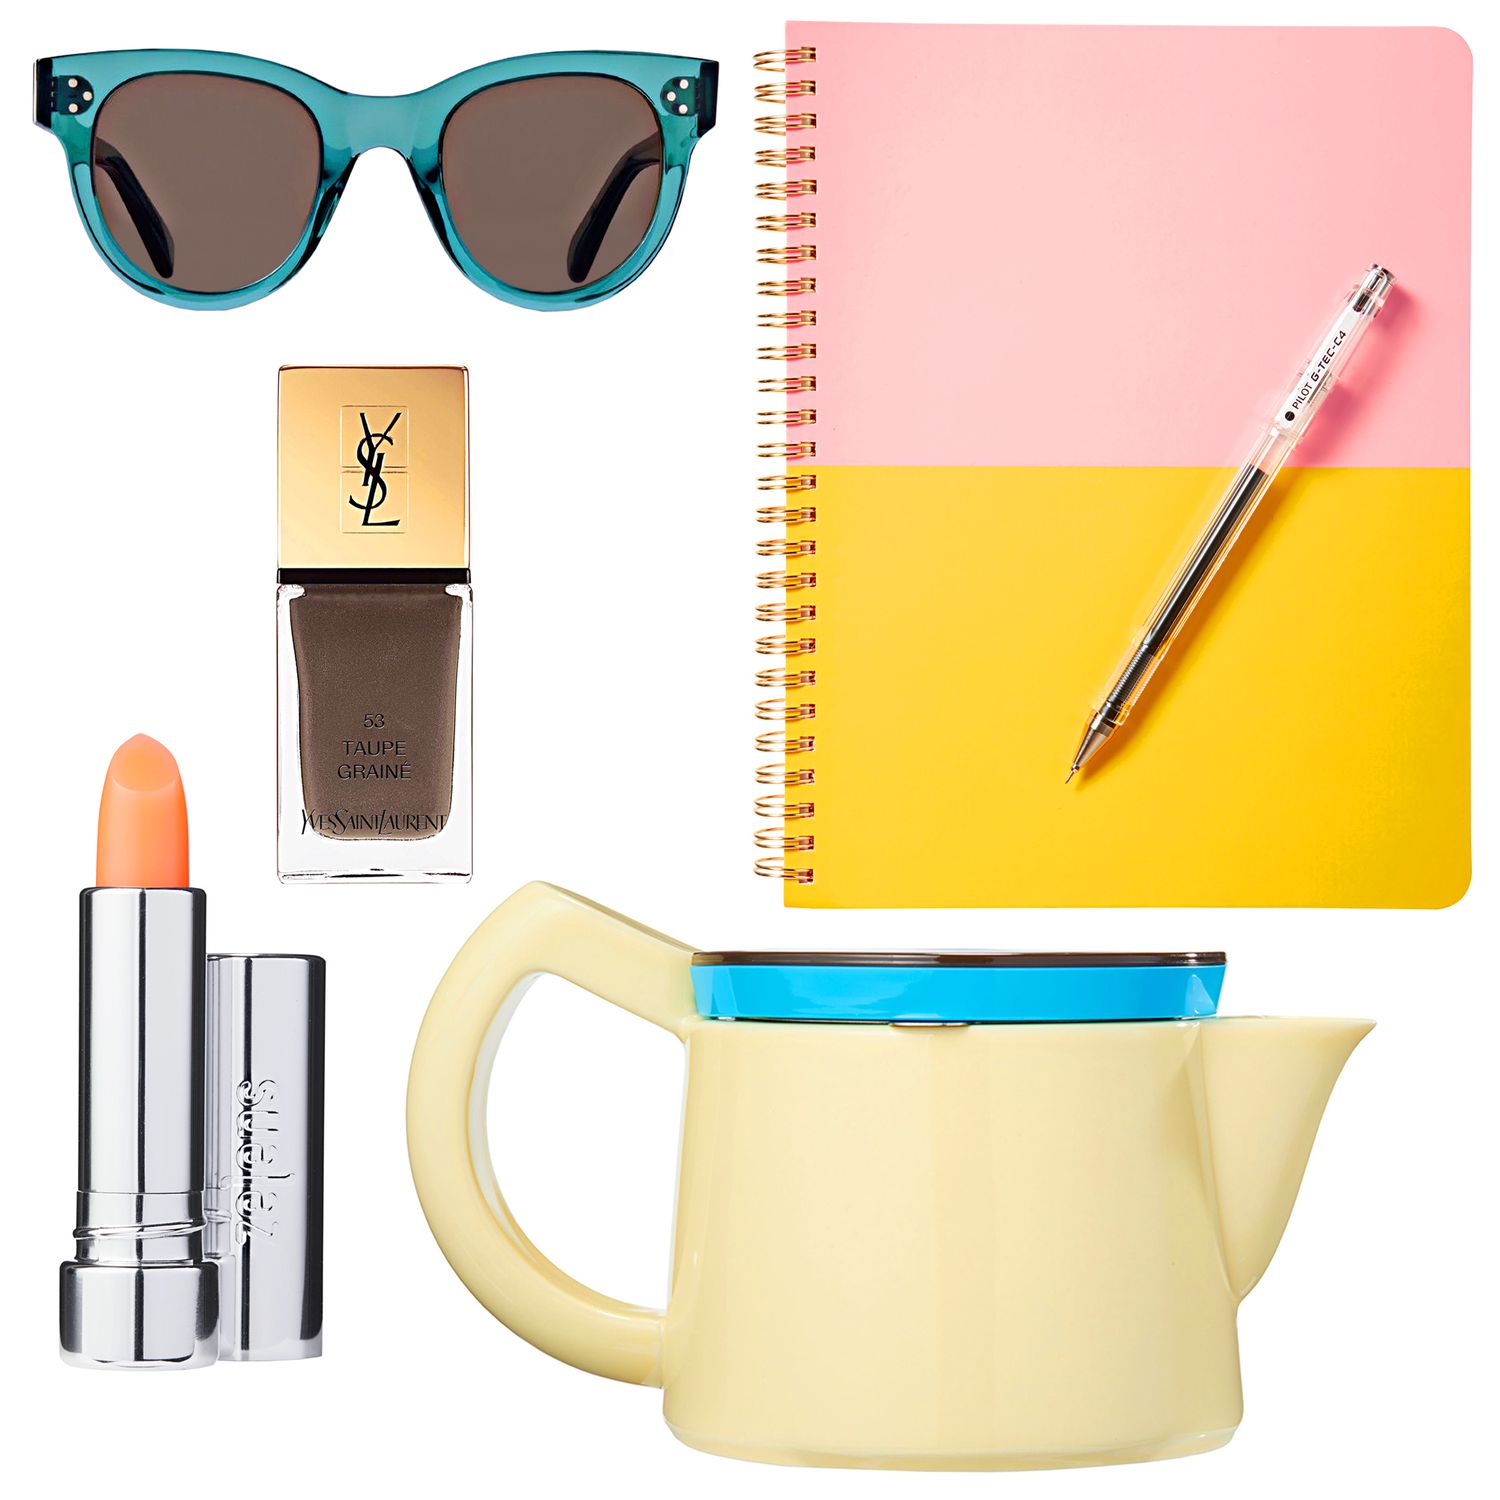 tastemaker products sunglasses lipstick coffeepot notebook nail polish